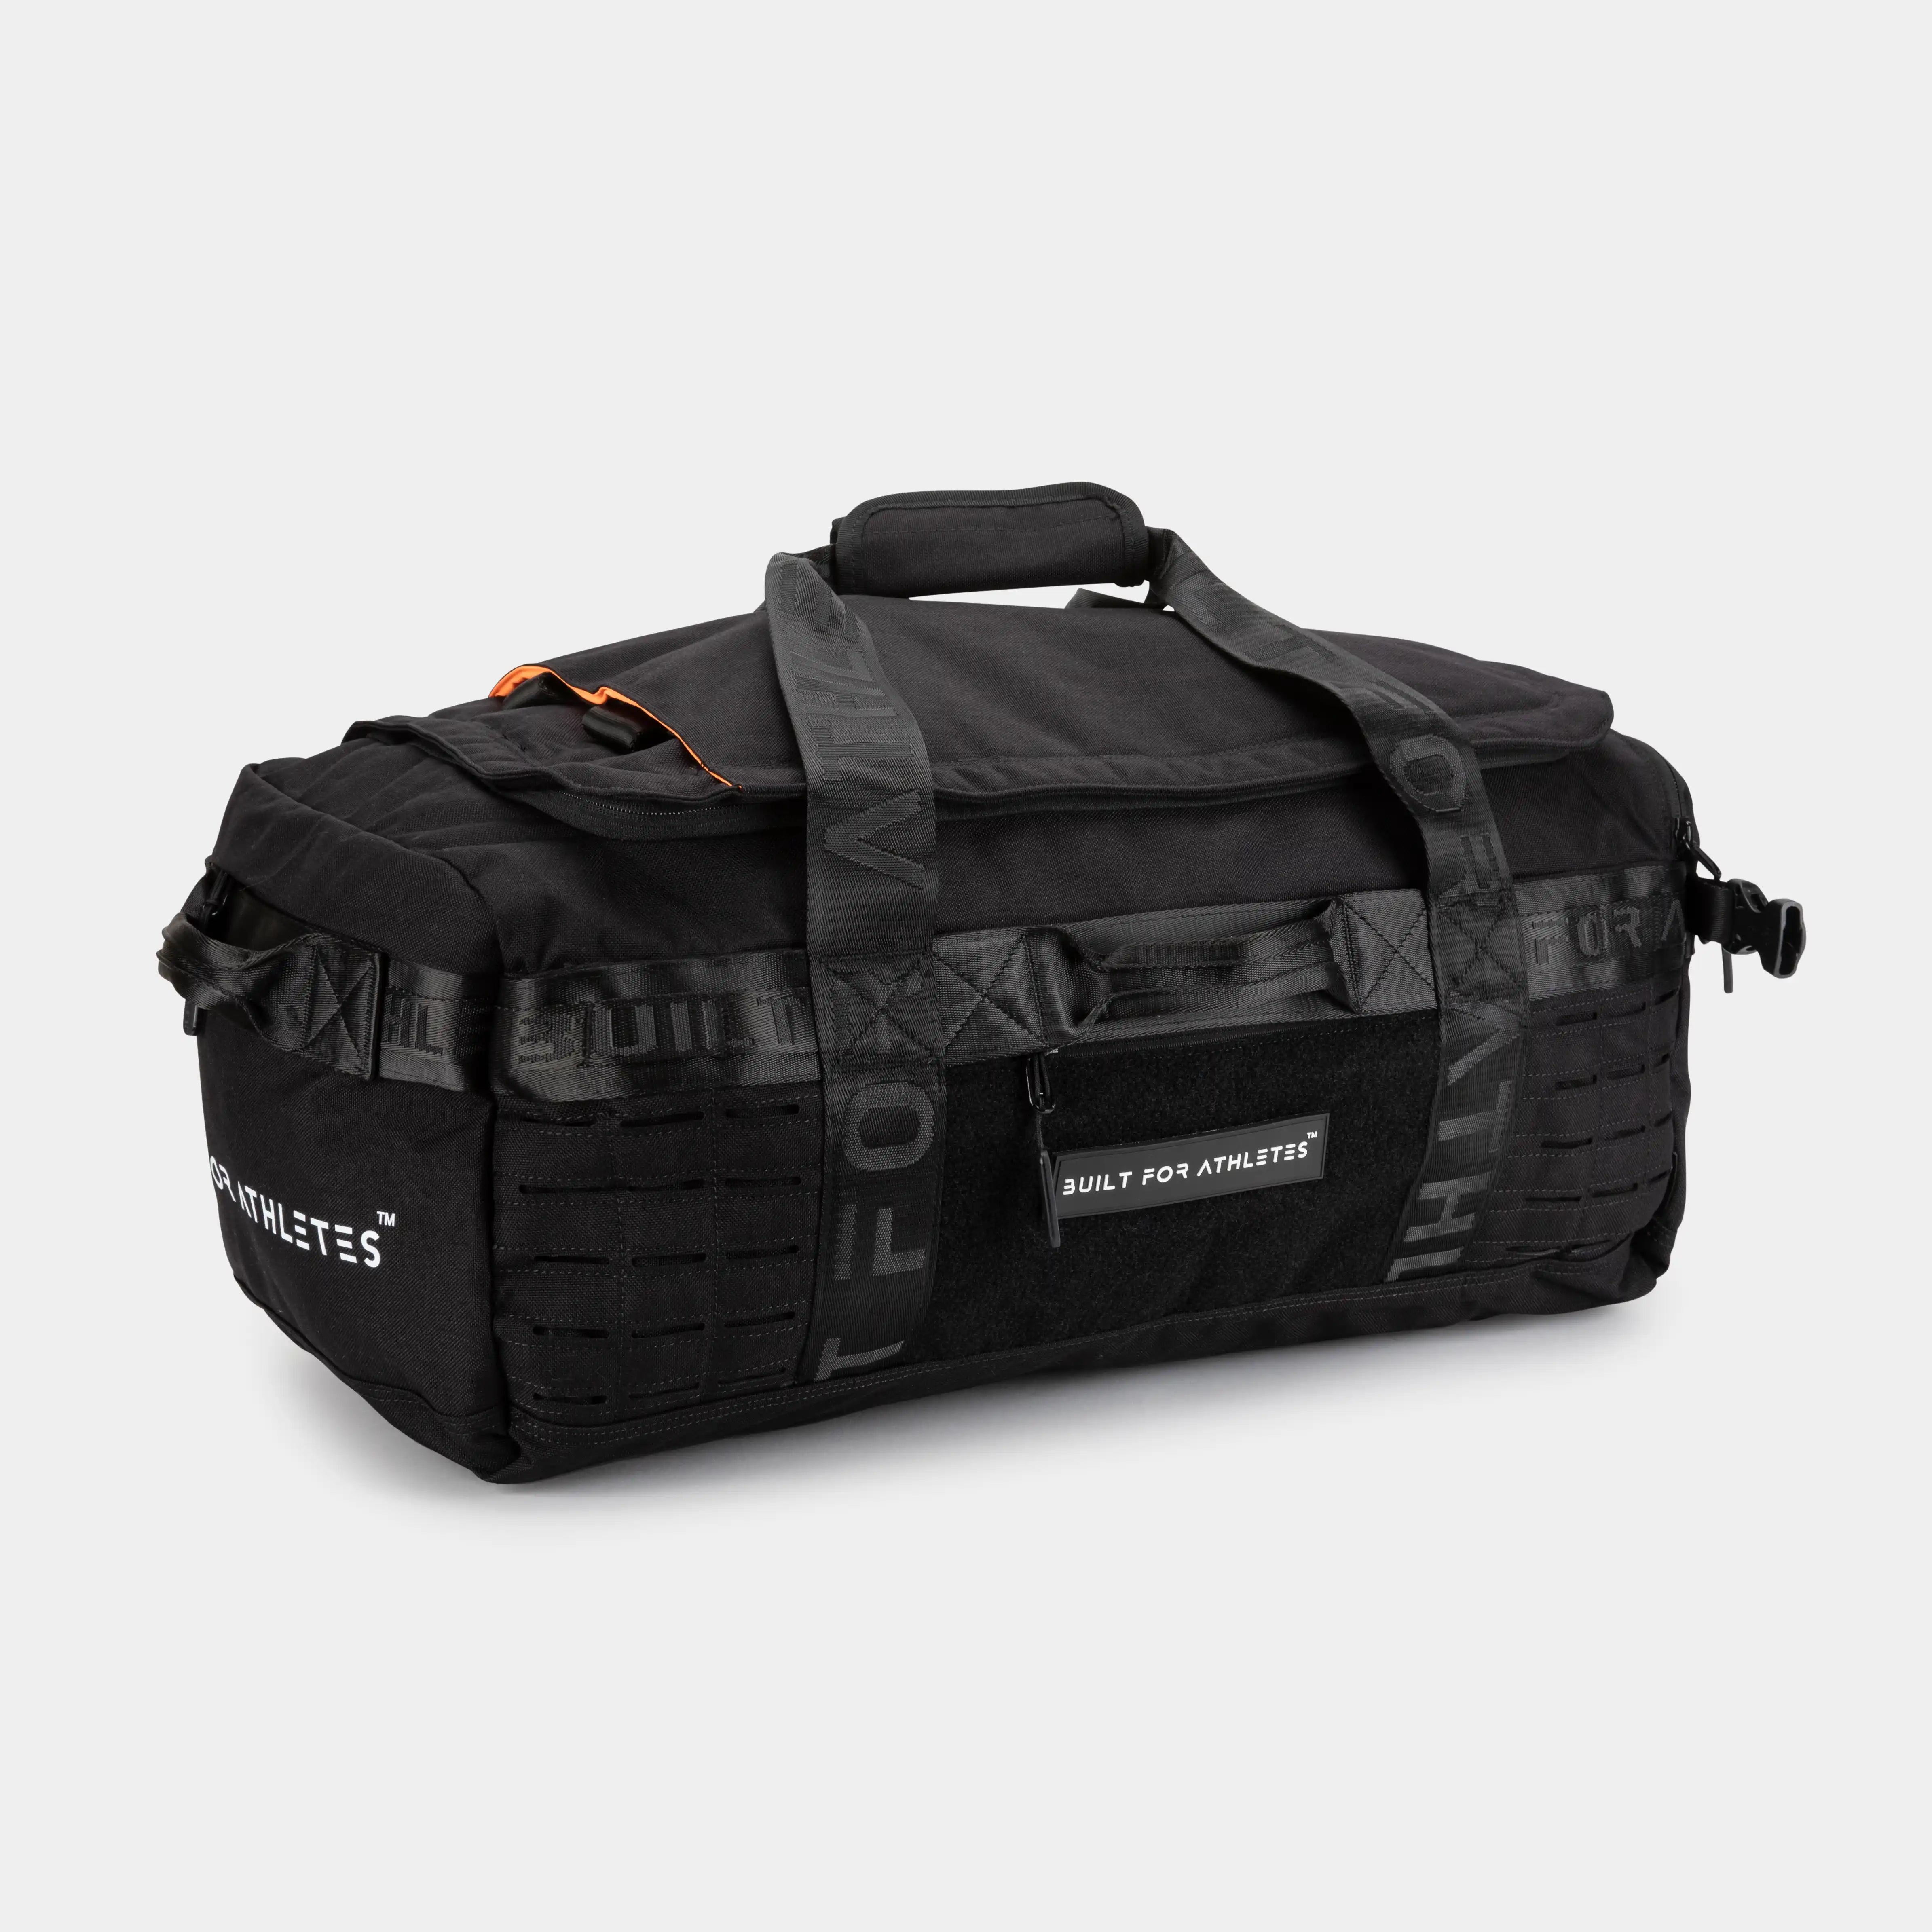 Built for Athletes™ Duffel Bag Pro Series 60L Duffel Bag